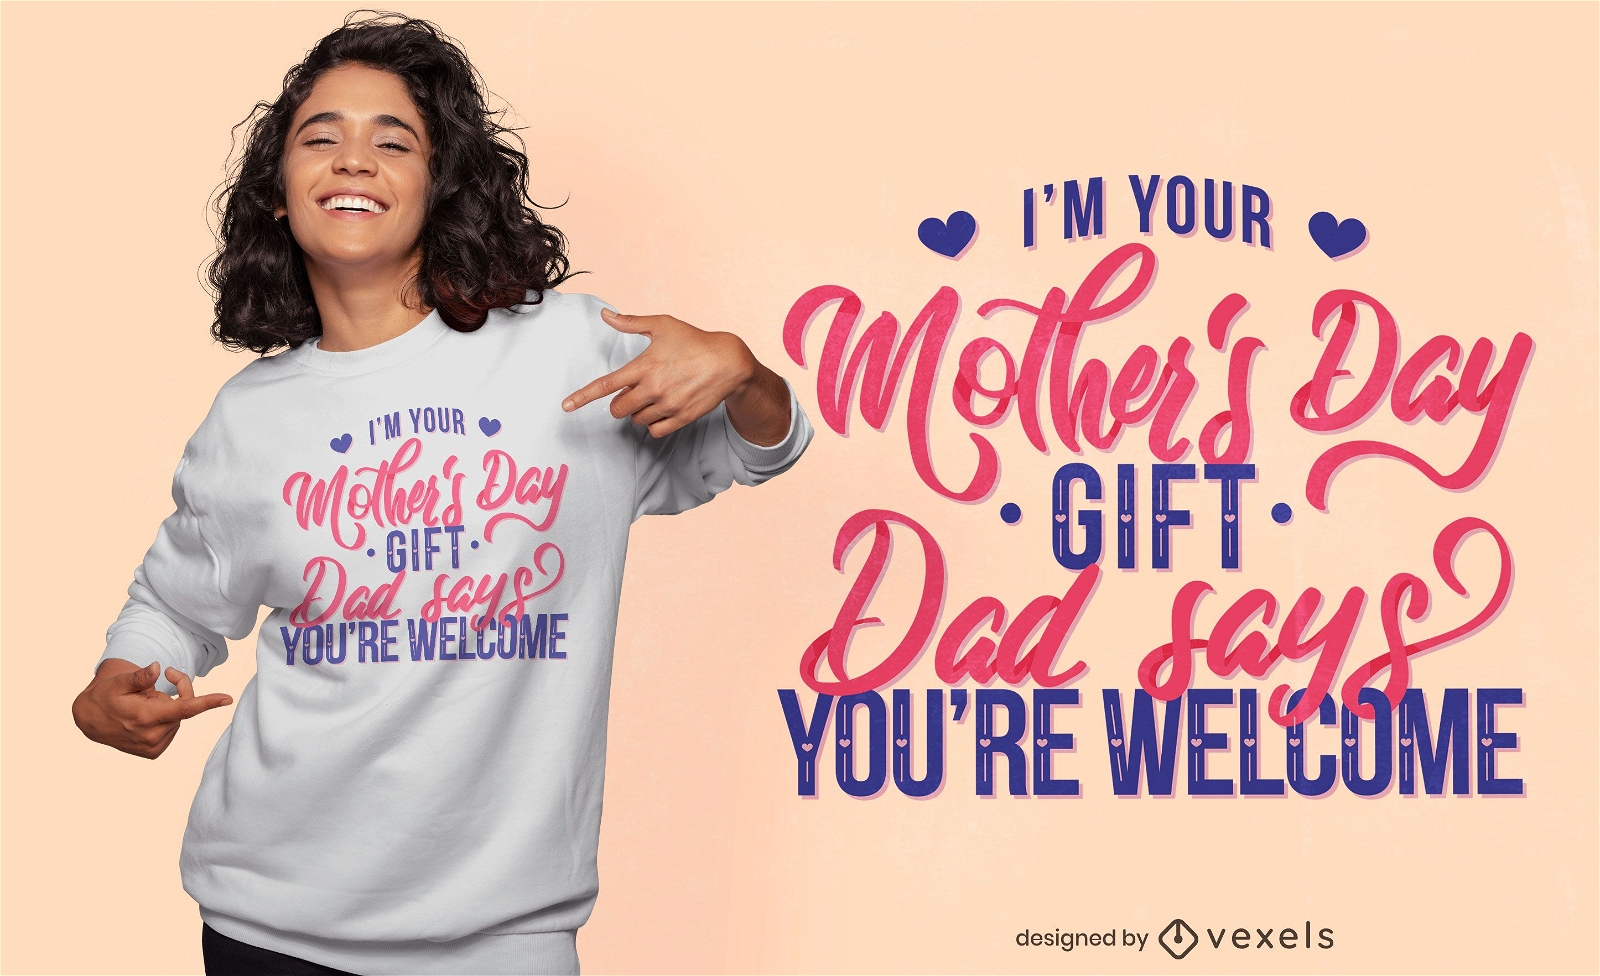 Lustiges Zitat-T-Shirt-Design des Muttertags